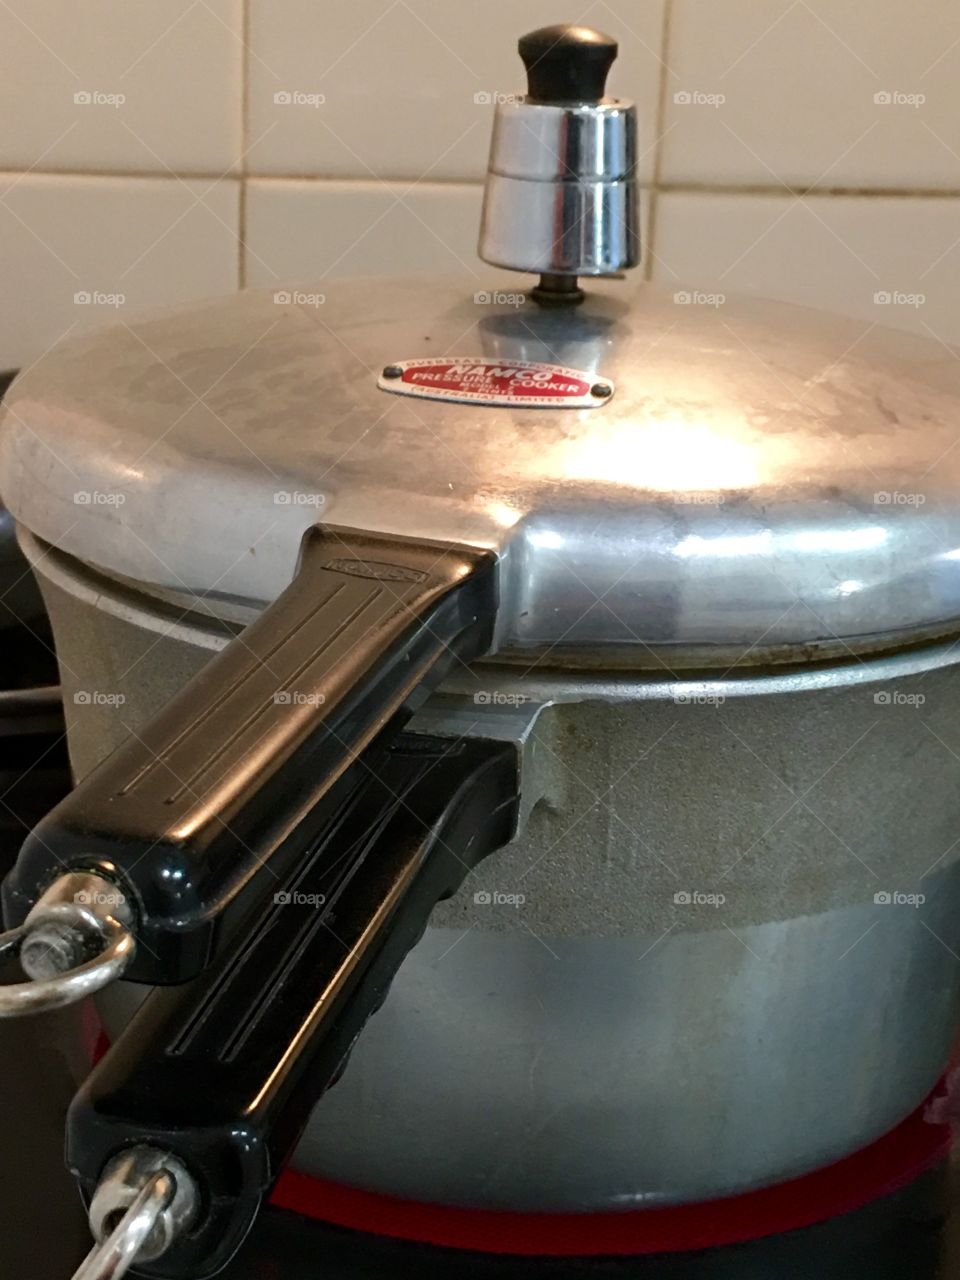 Pressure cooker old fashioned vintage on stove